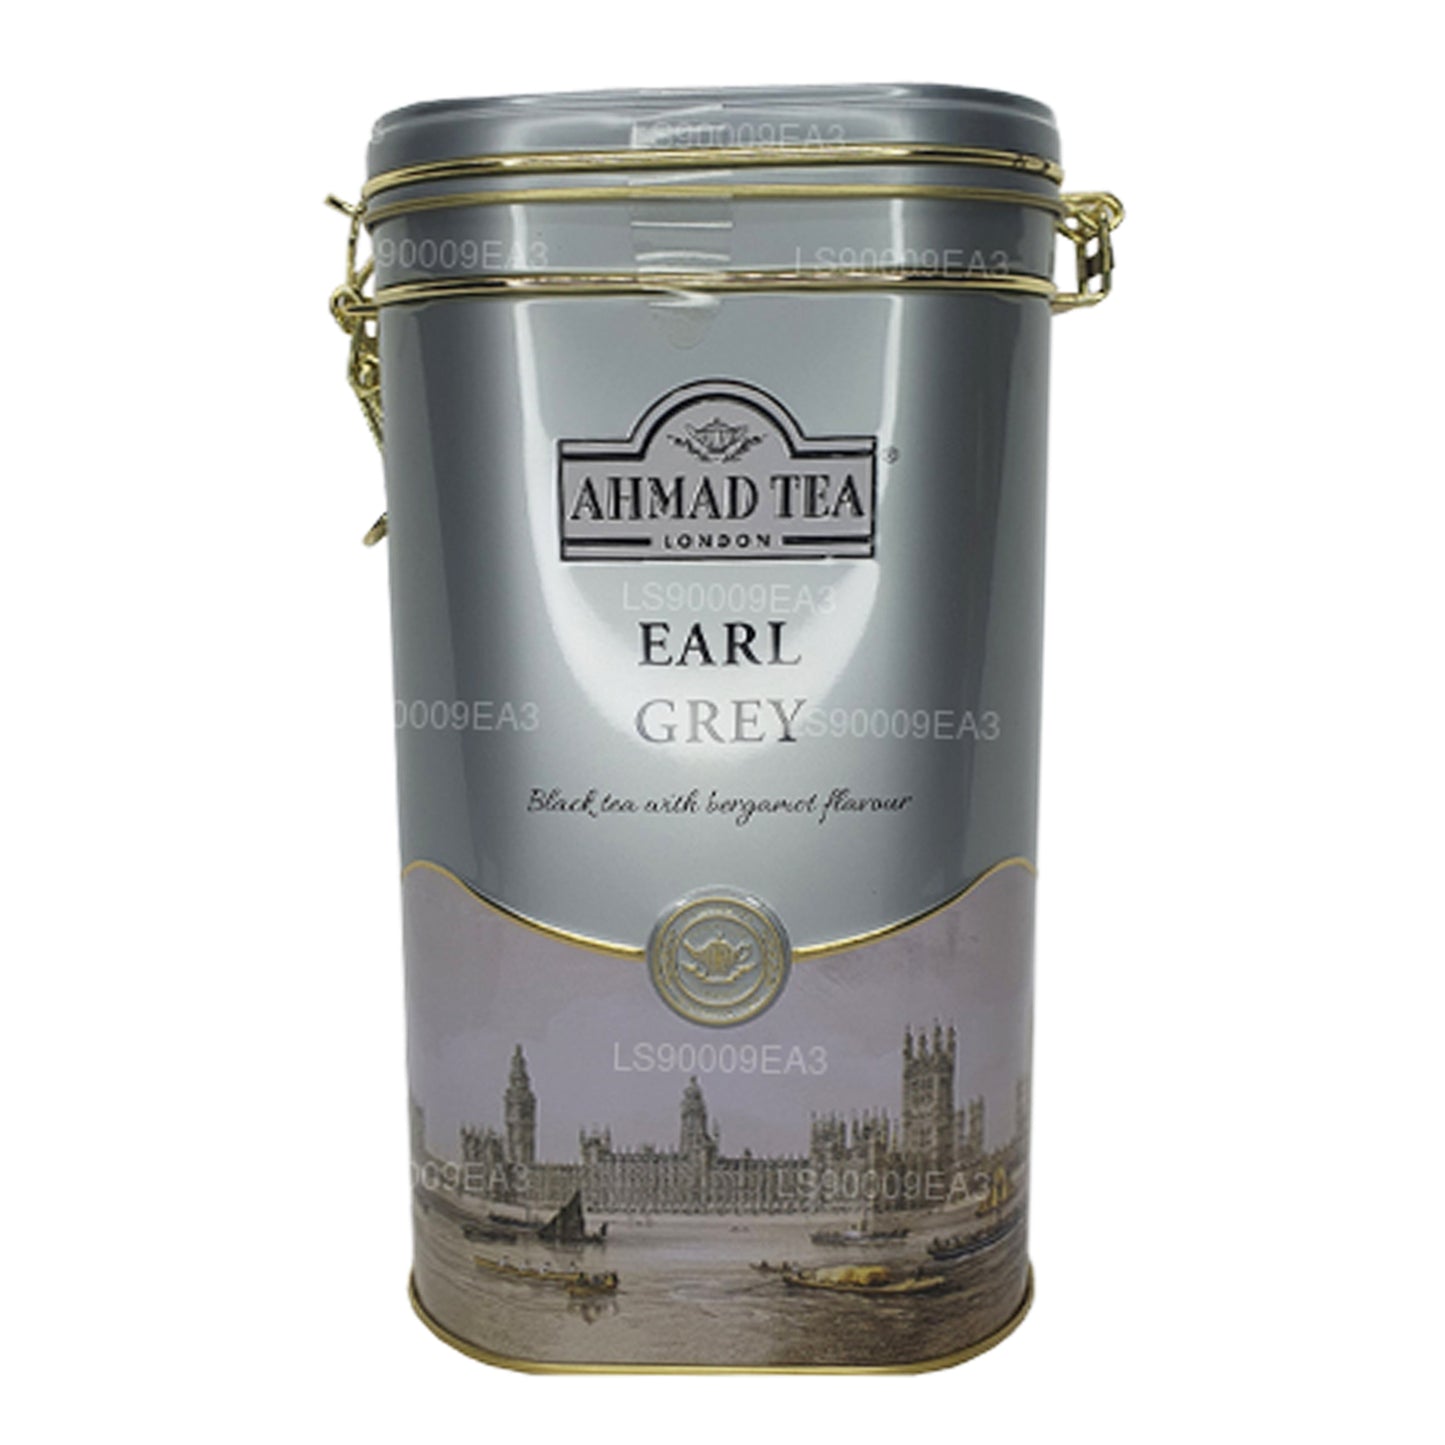 Ahamad Earl Grey sort te med bergamot smag (450 g)